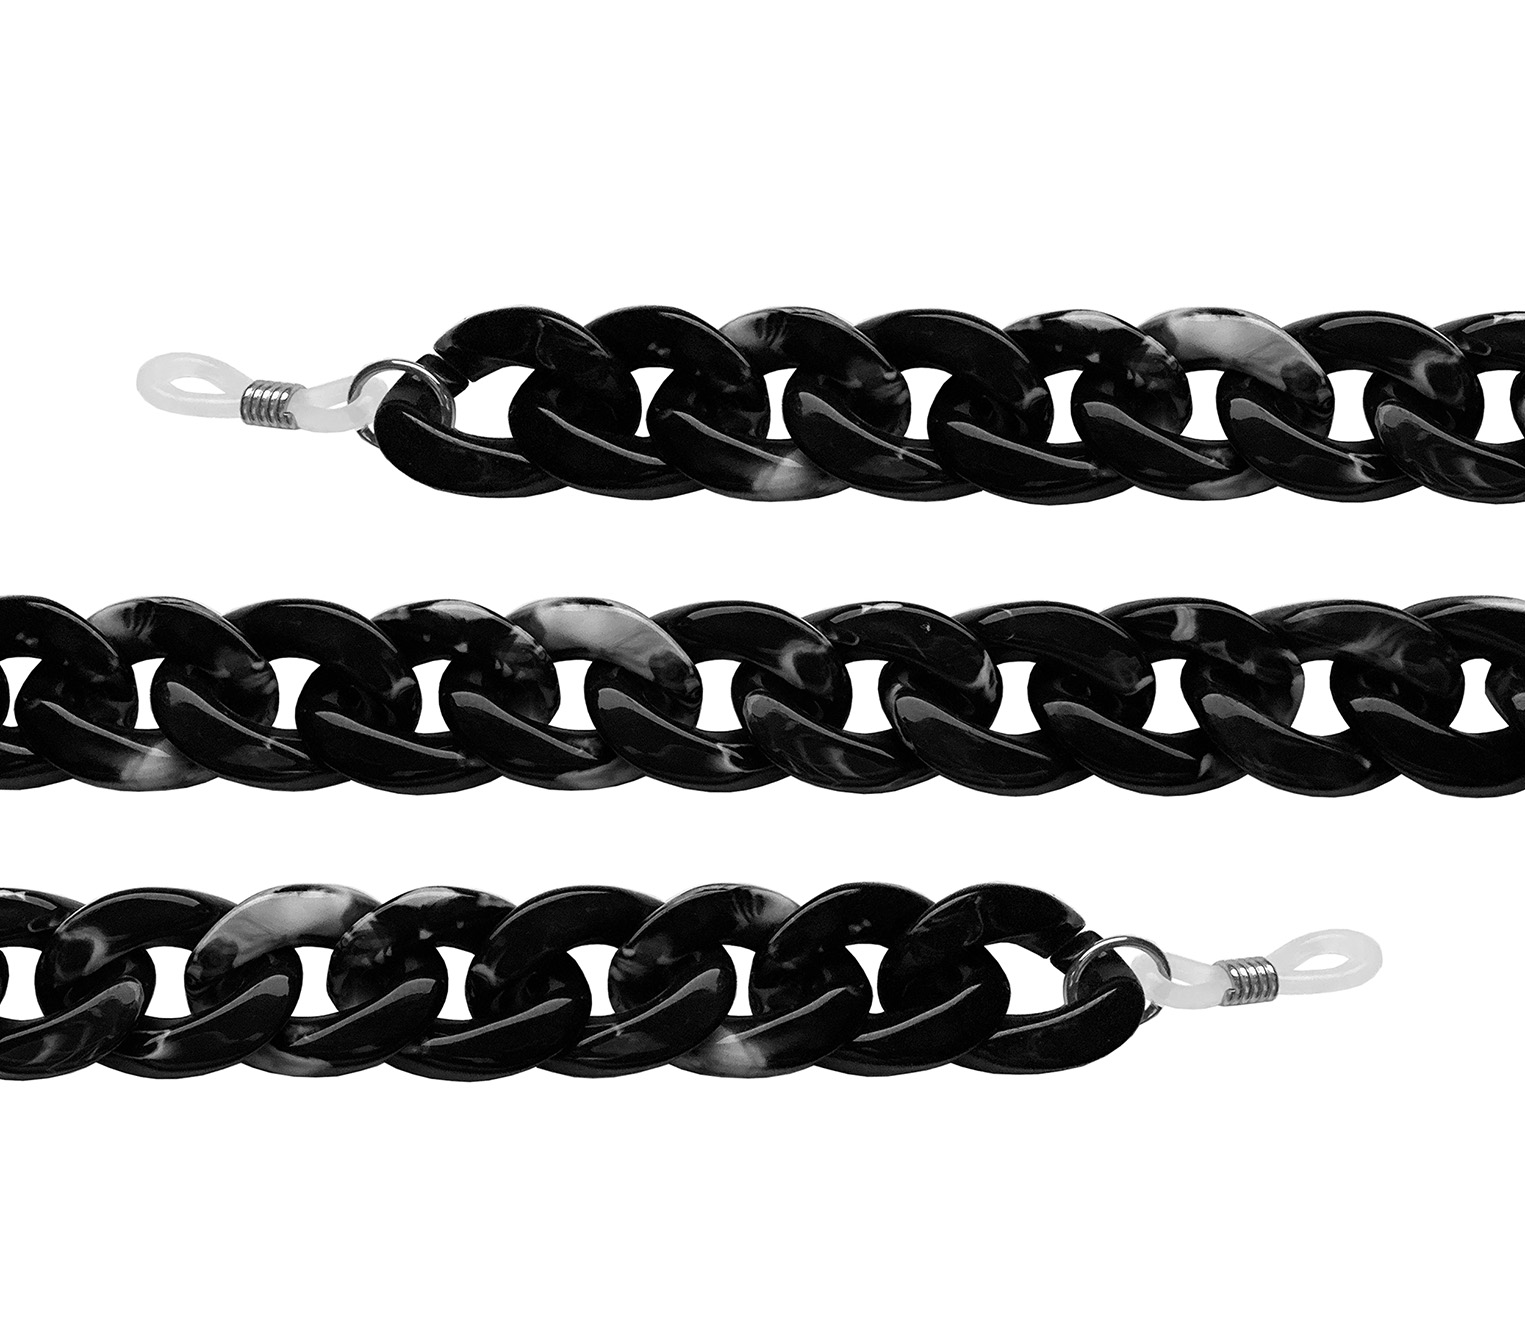 Main Image (Angle) - Coco (Black) Glasses Chains Accessories